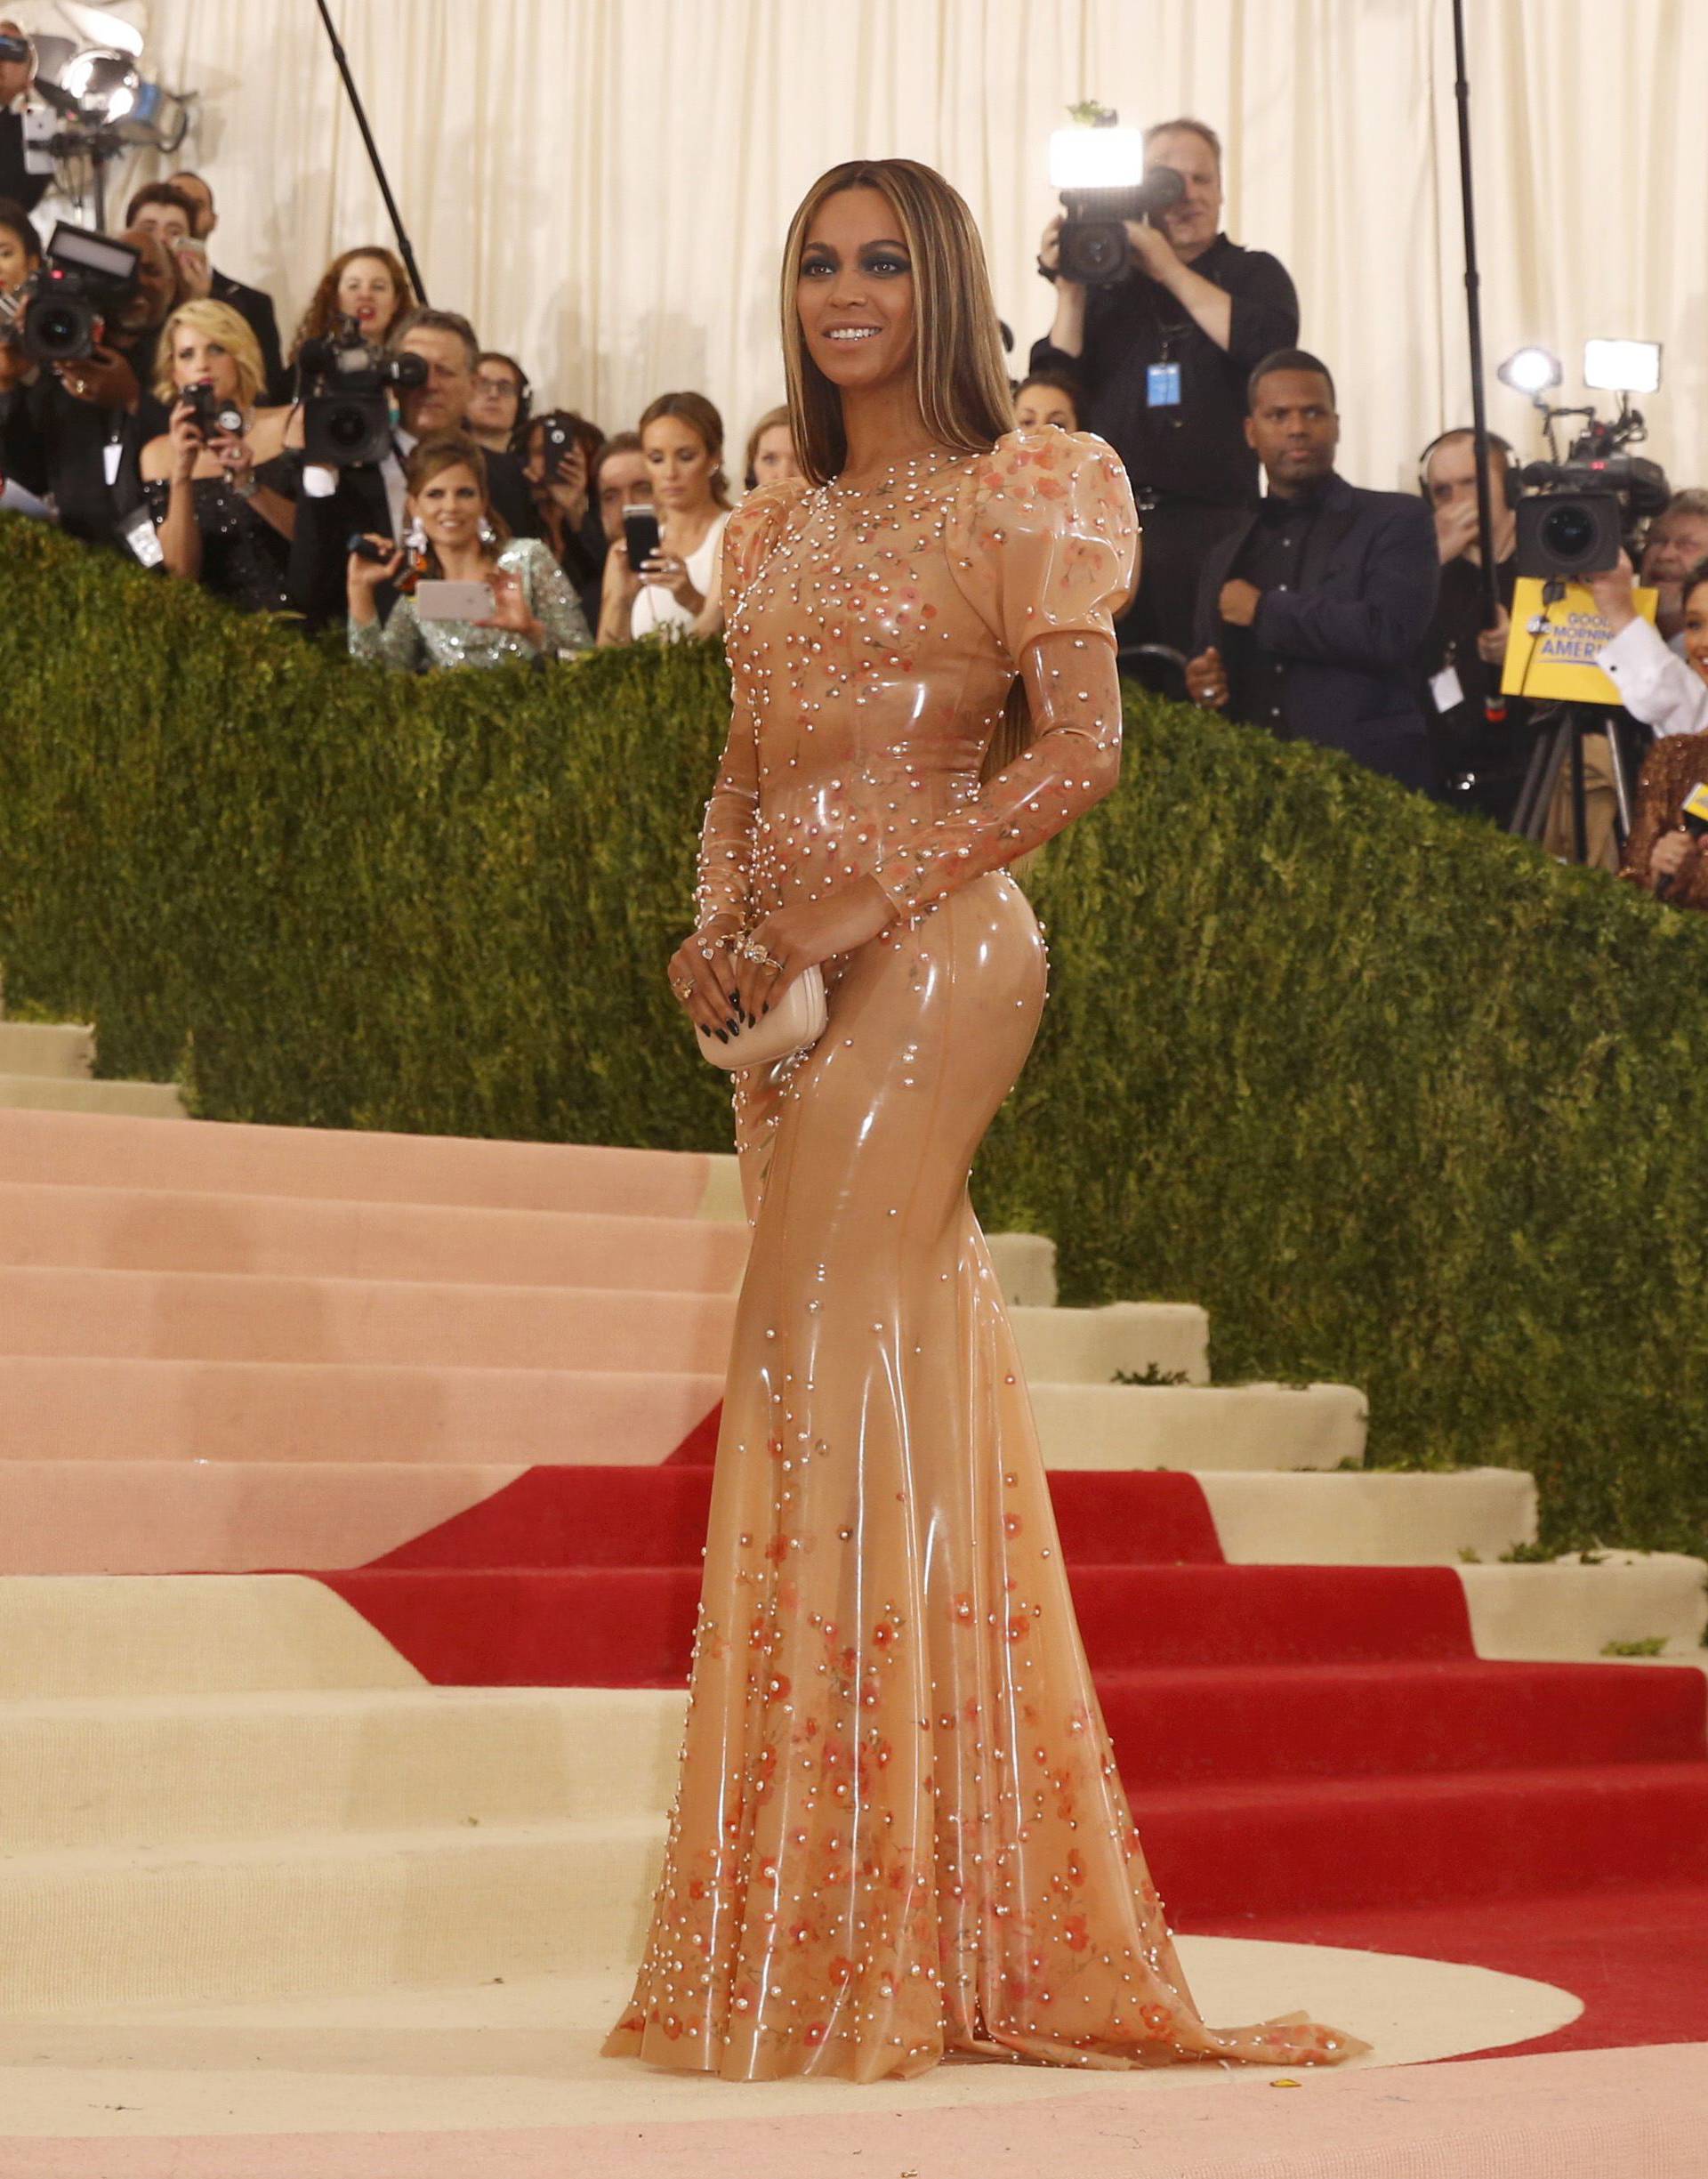 Singer-Songwriter Beyonce Knowles arrives at the Met Gala in New York